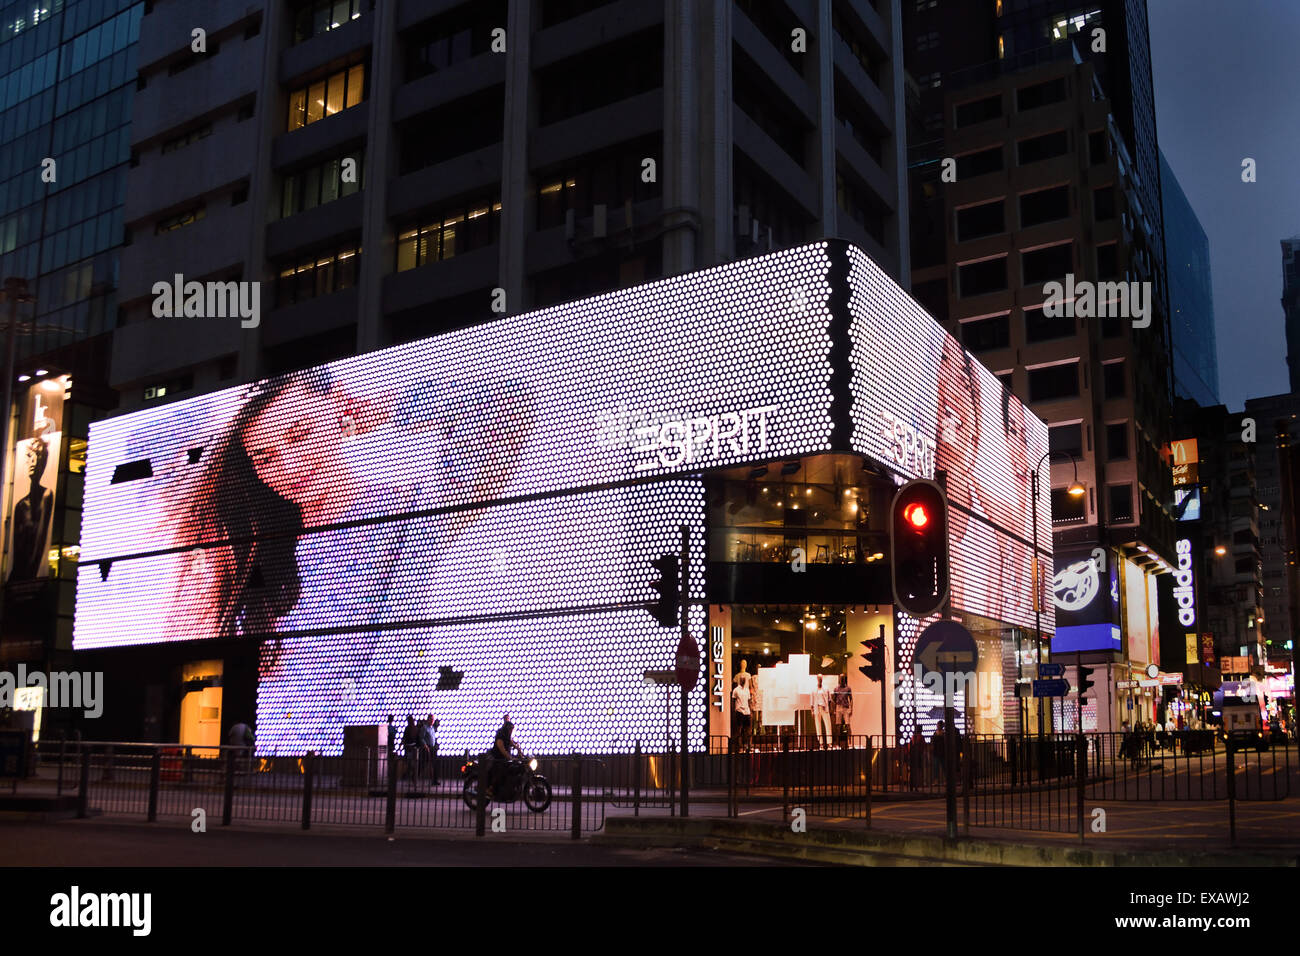 Esprit Fashion Store Hong Kong Kowloon - Sim Sha Tsui - China Chinese ( evening night neon light billboard ) Stock Photo